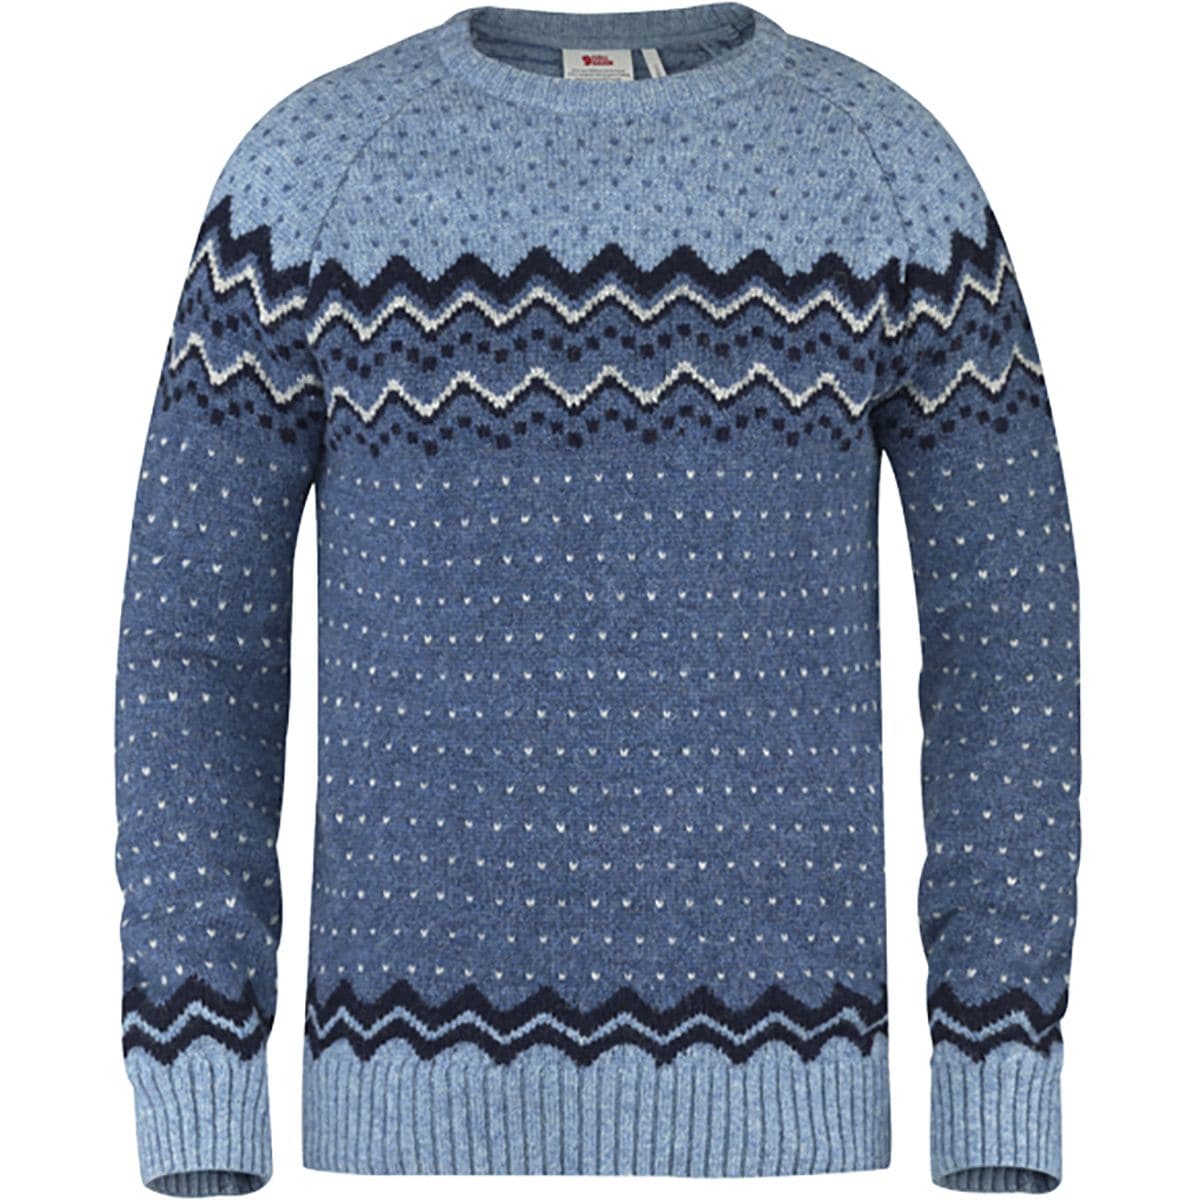 Ovik Knit Sweater - Men